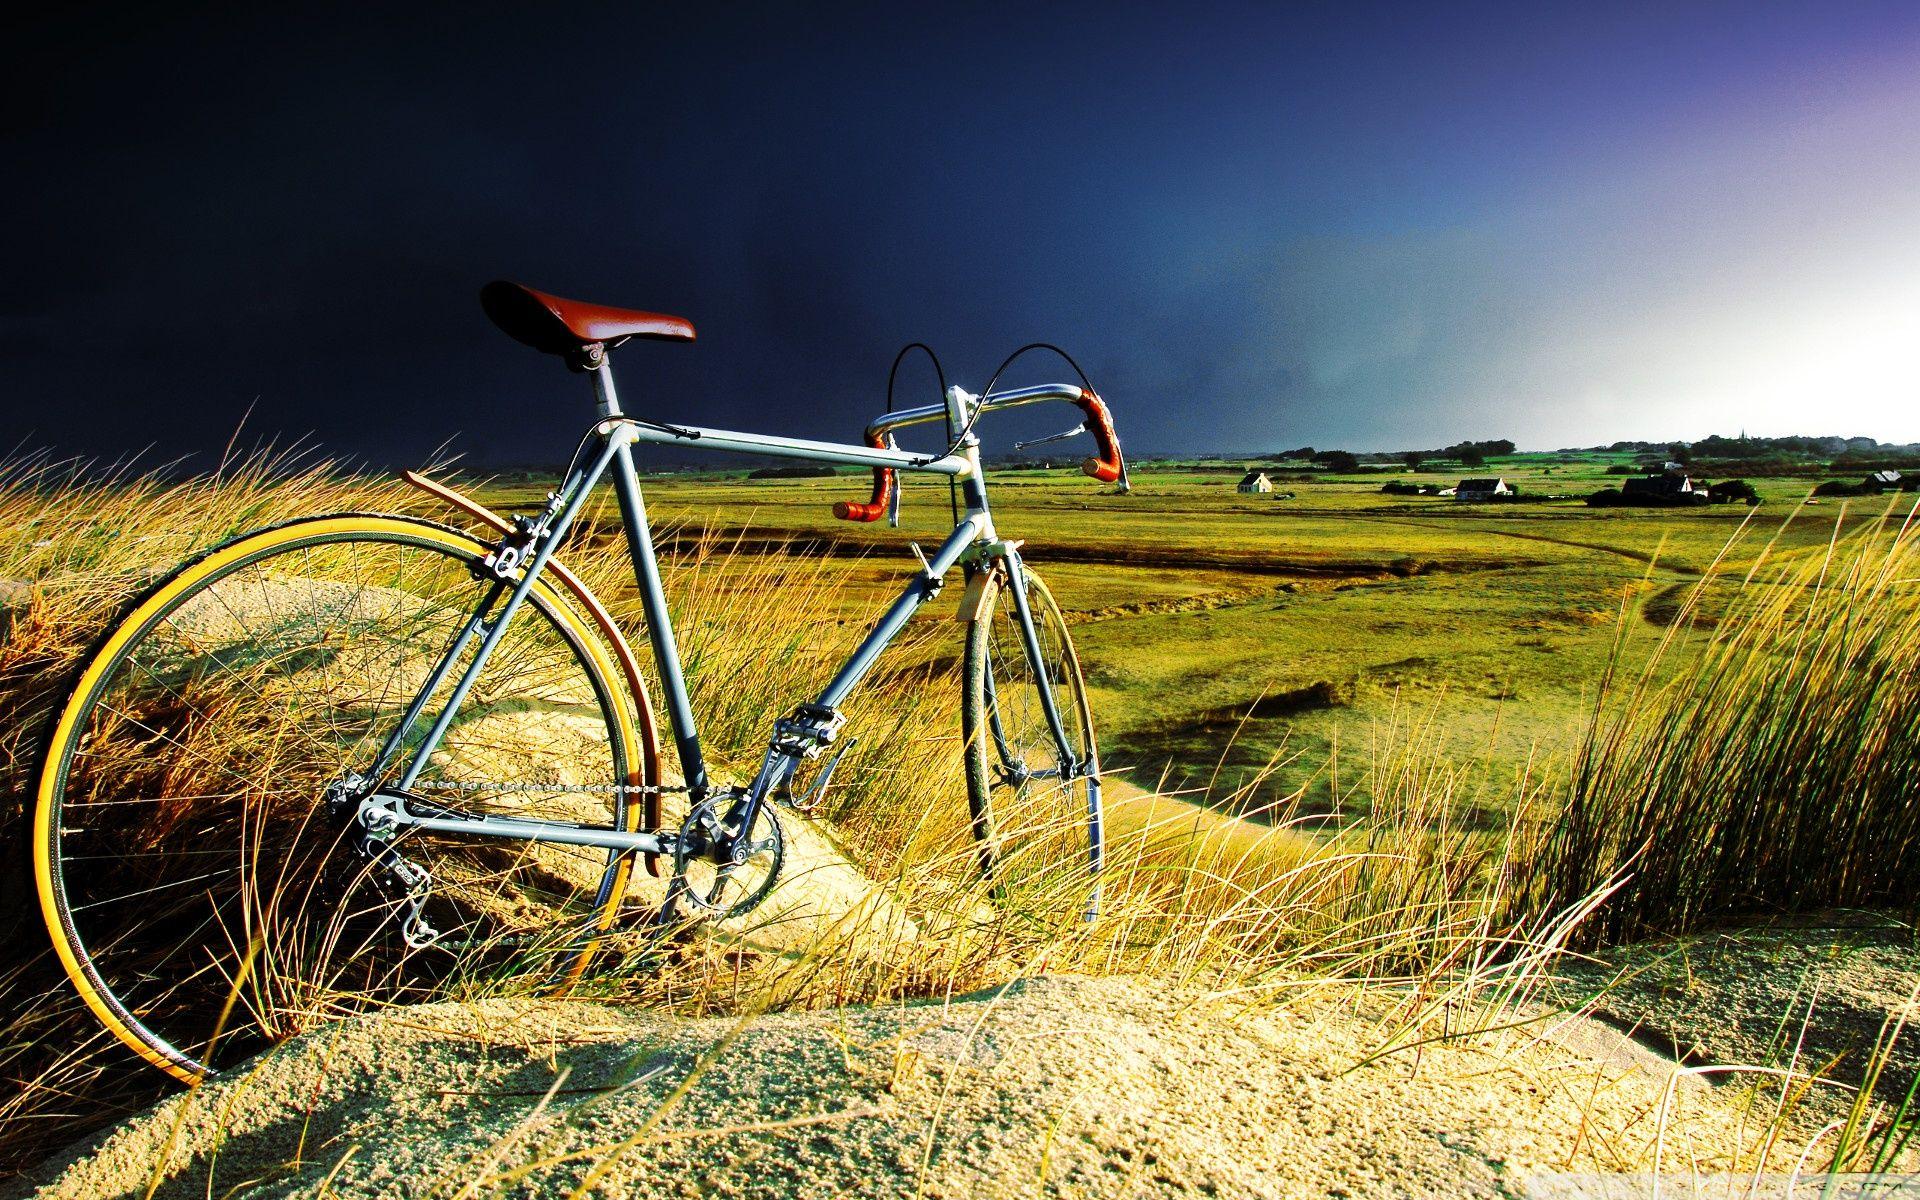 Vintage bicycle in the storm. ❤ 4K HD Desktop Wallpaper for 4K